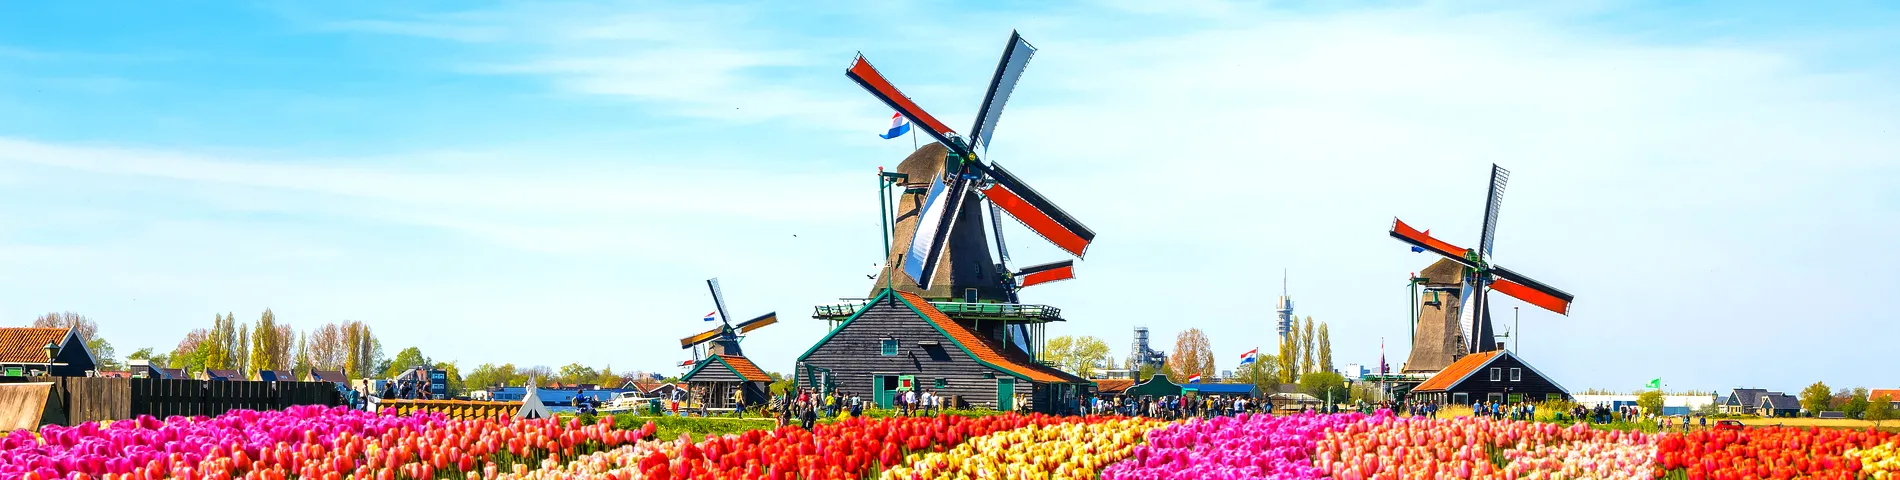 Netherlands - 